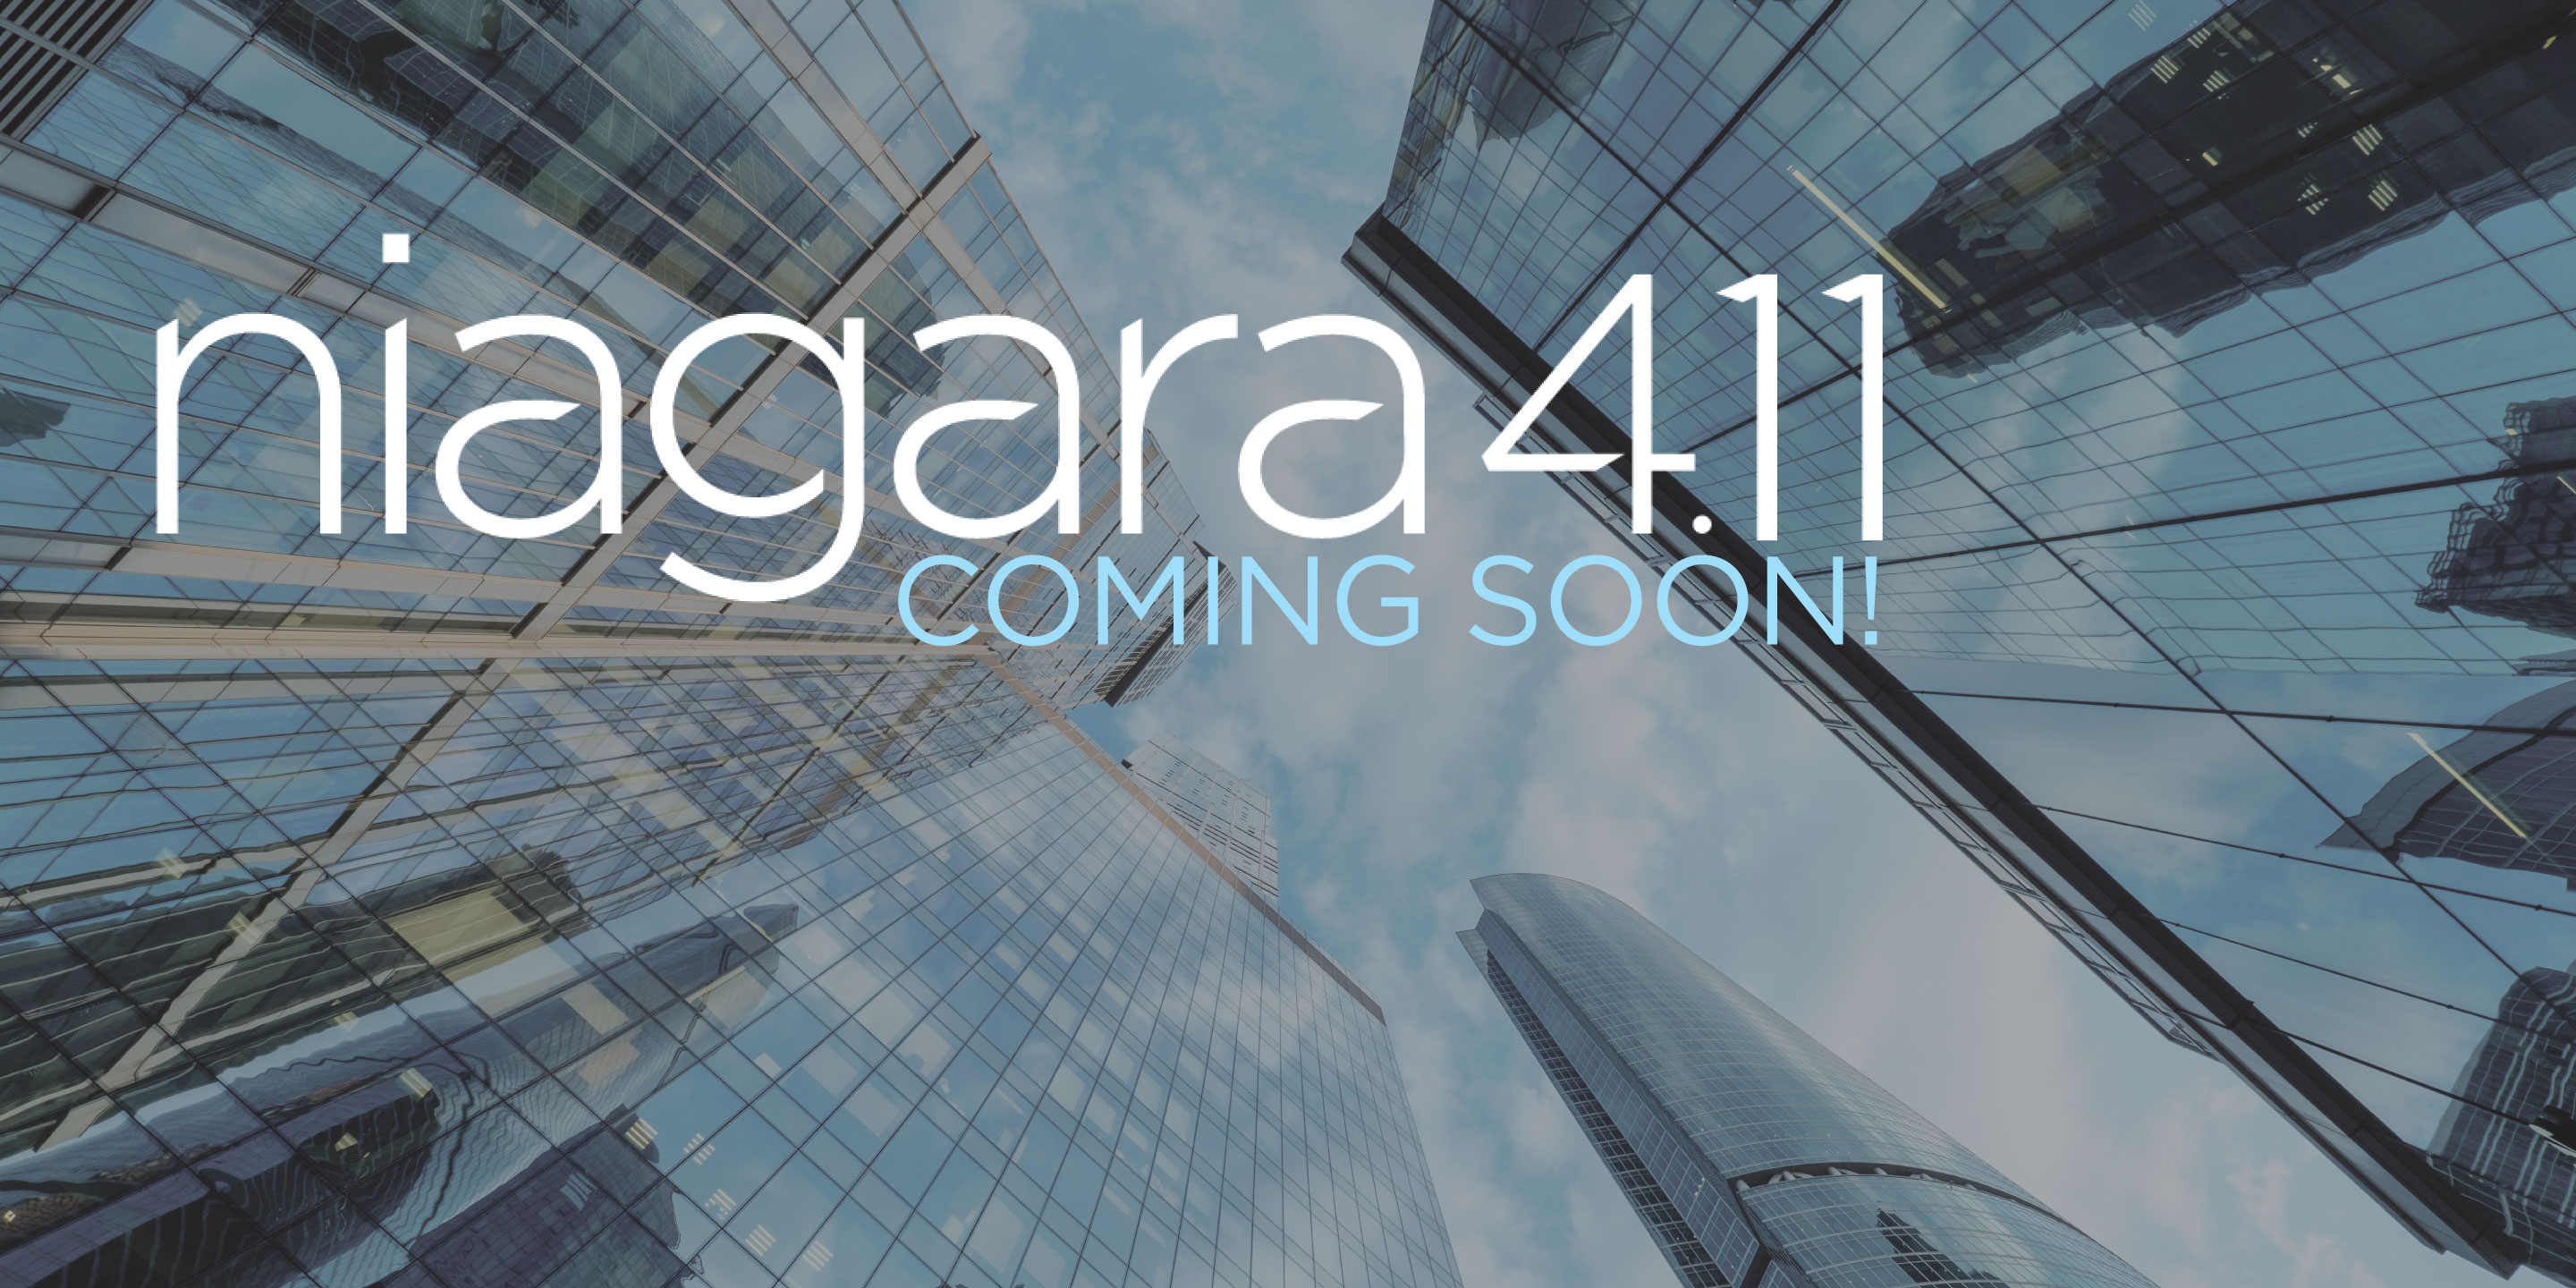 Niagara 4.11 Coming Soon